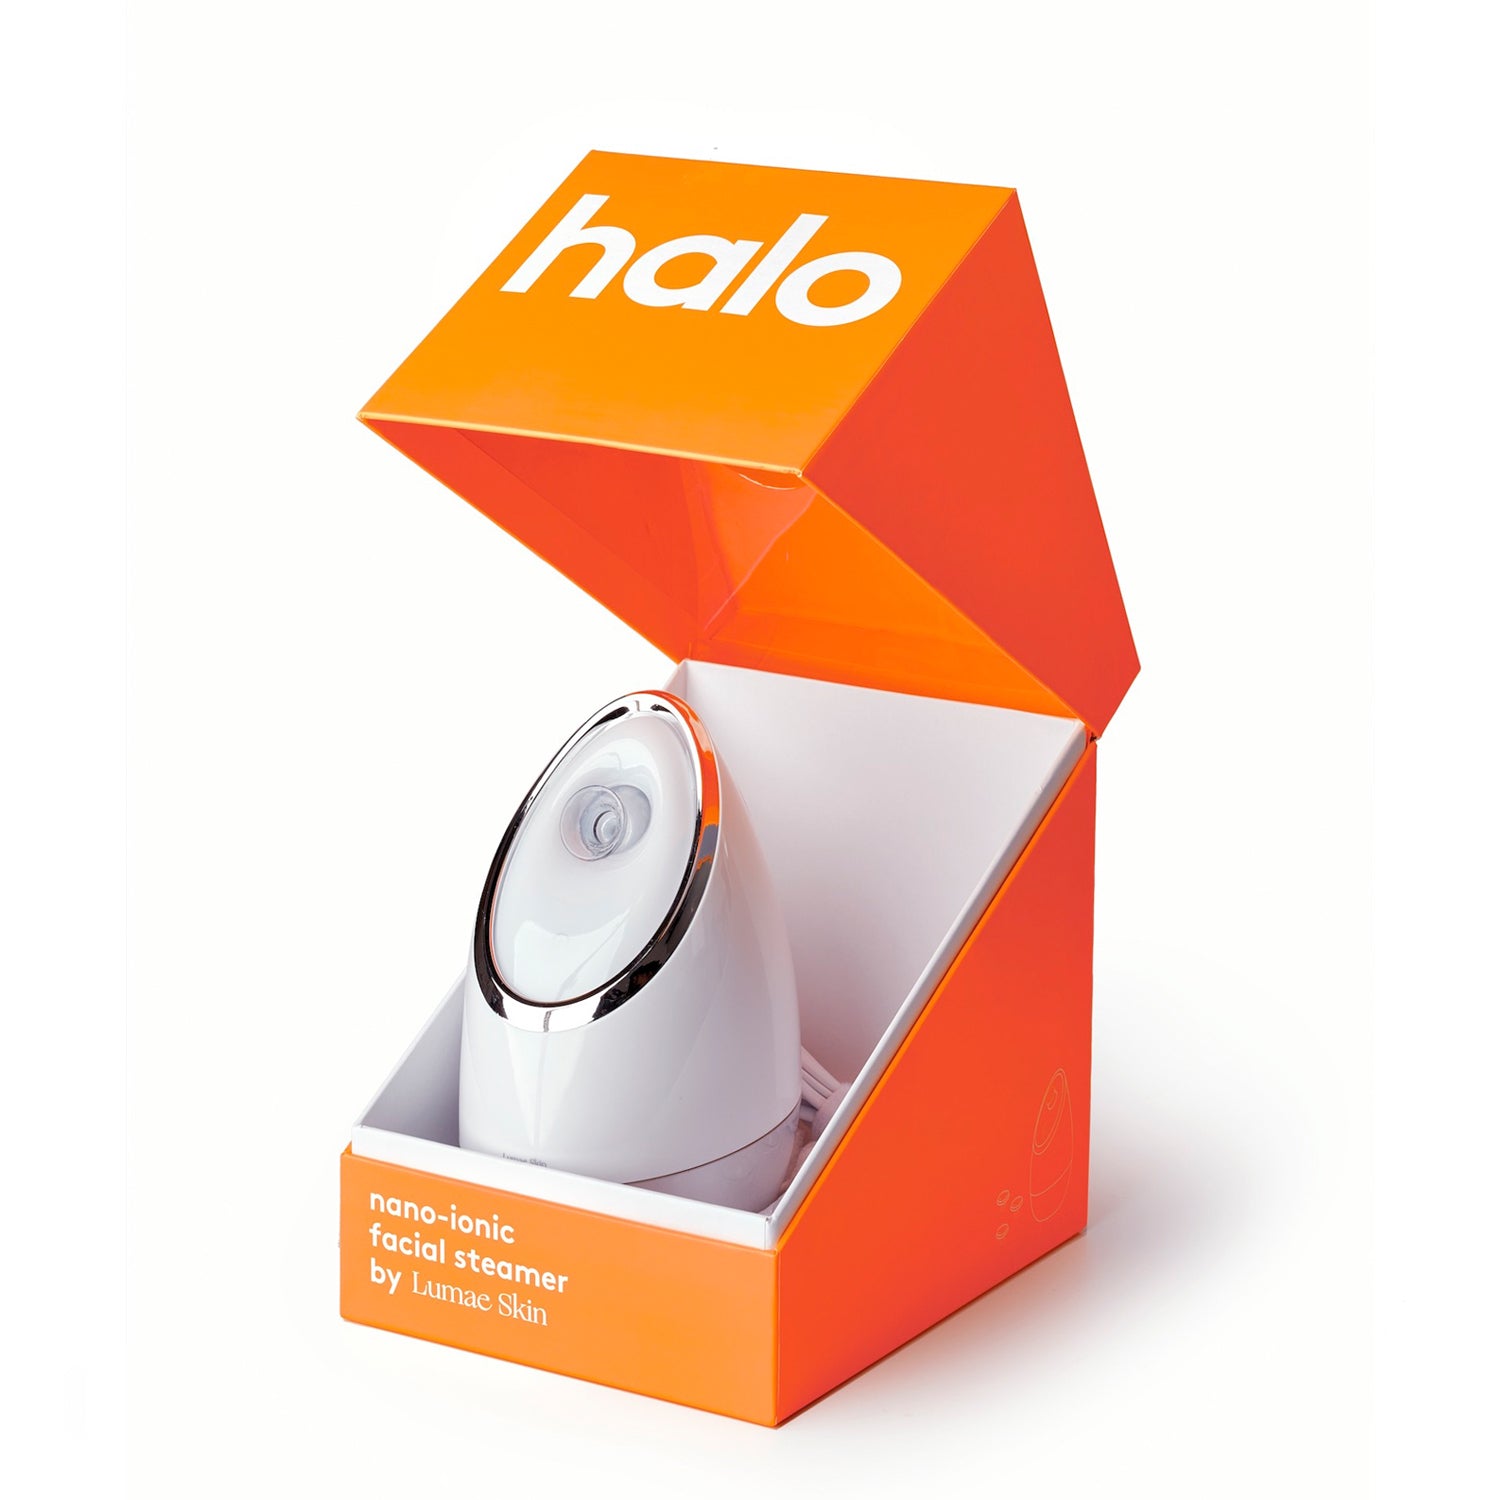 Halo Nano-Ionic Facial Steamer